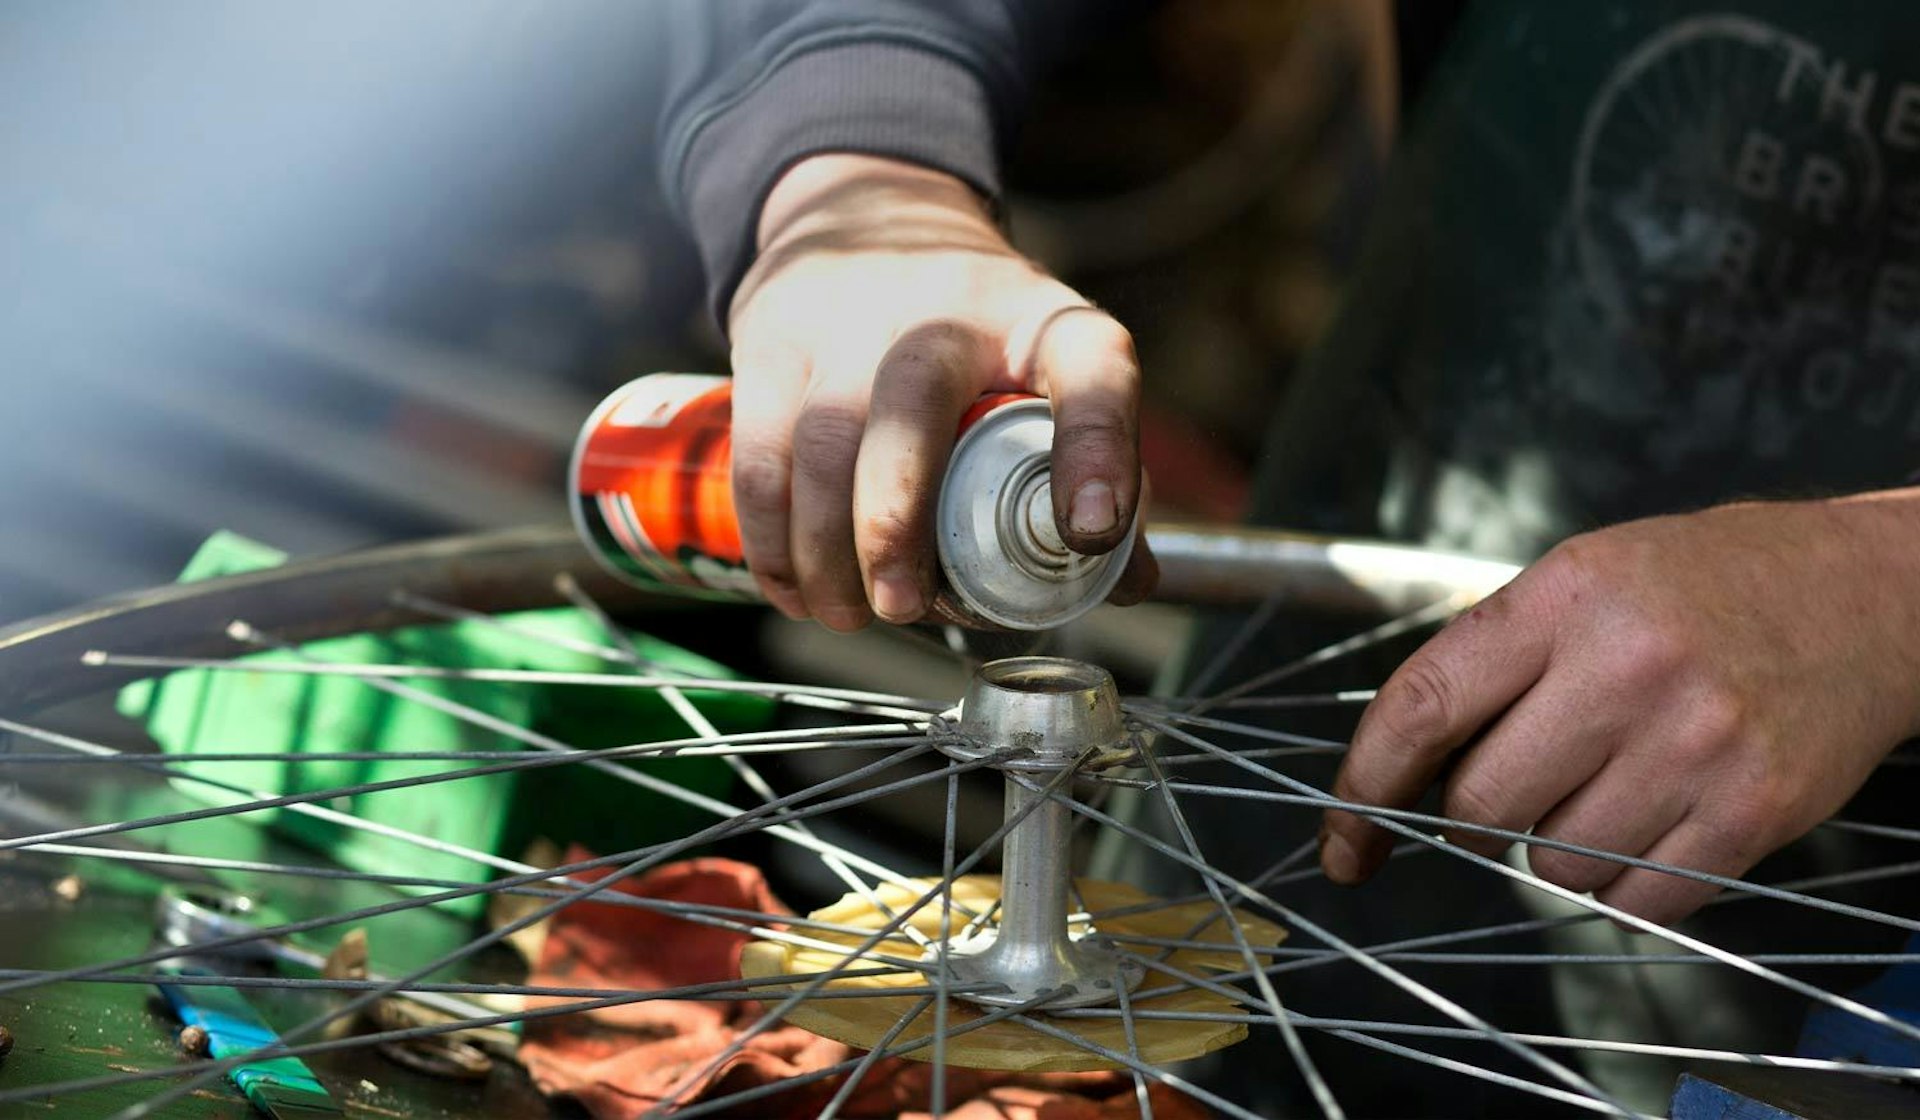 Bristol Bike Project shows how building bikes transforms lives